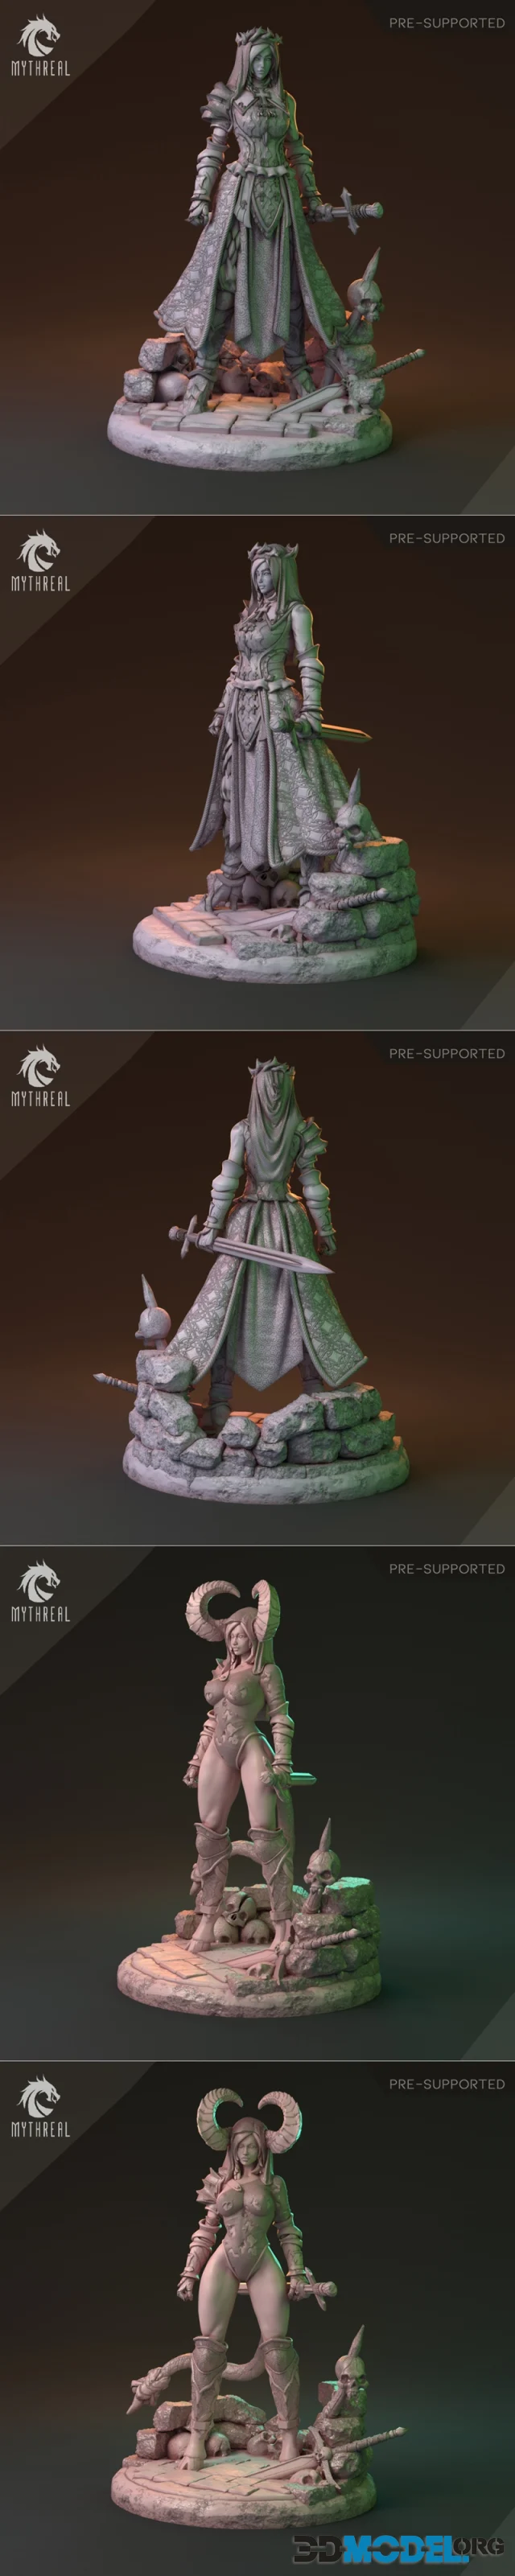 MythReal Games - Celestine – Printable